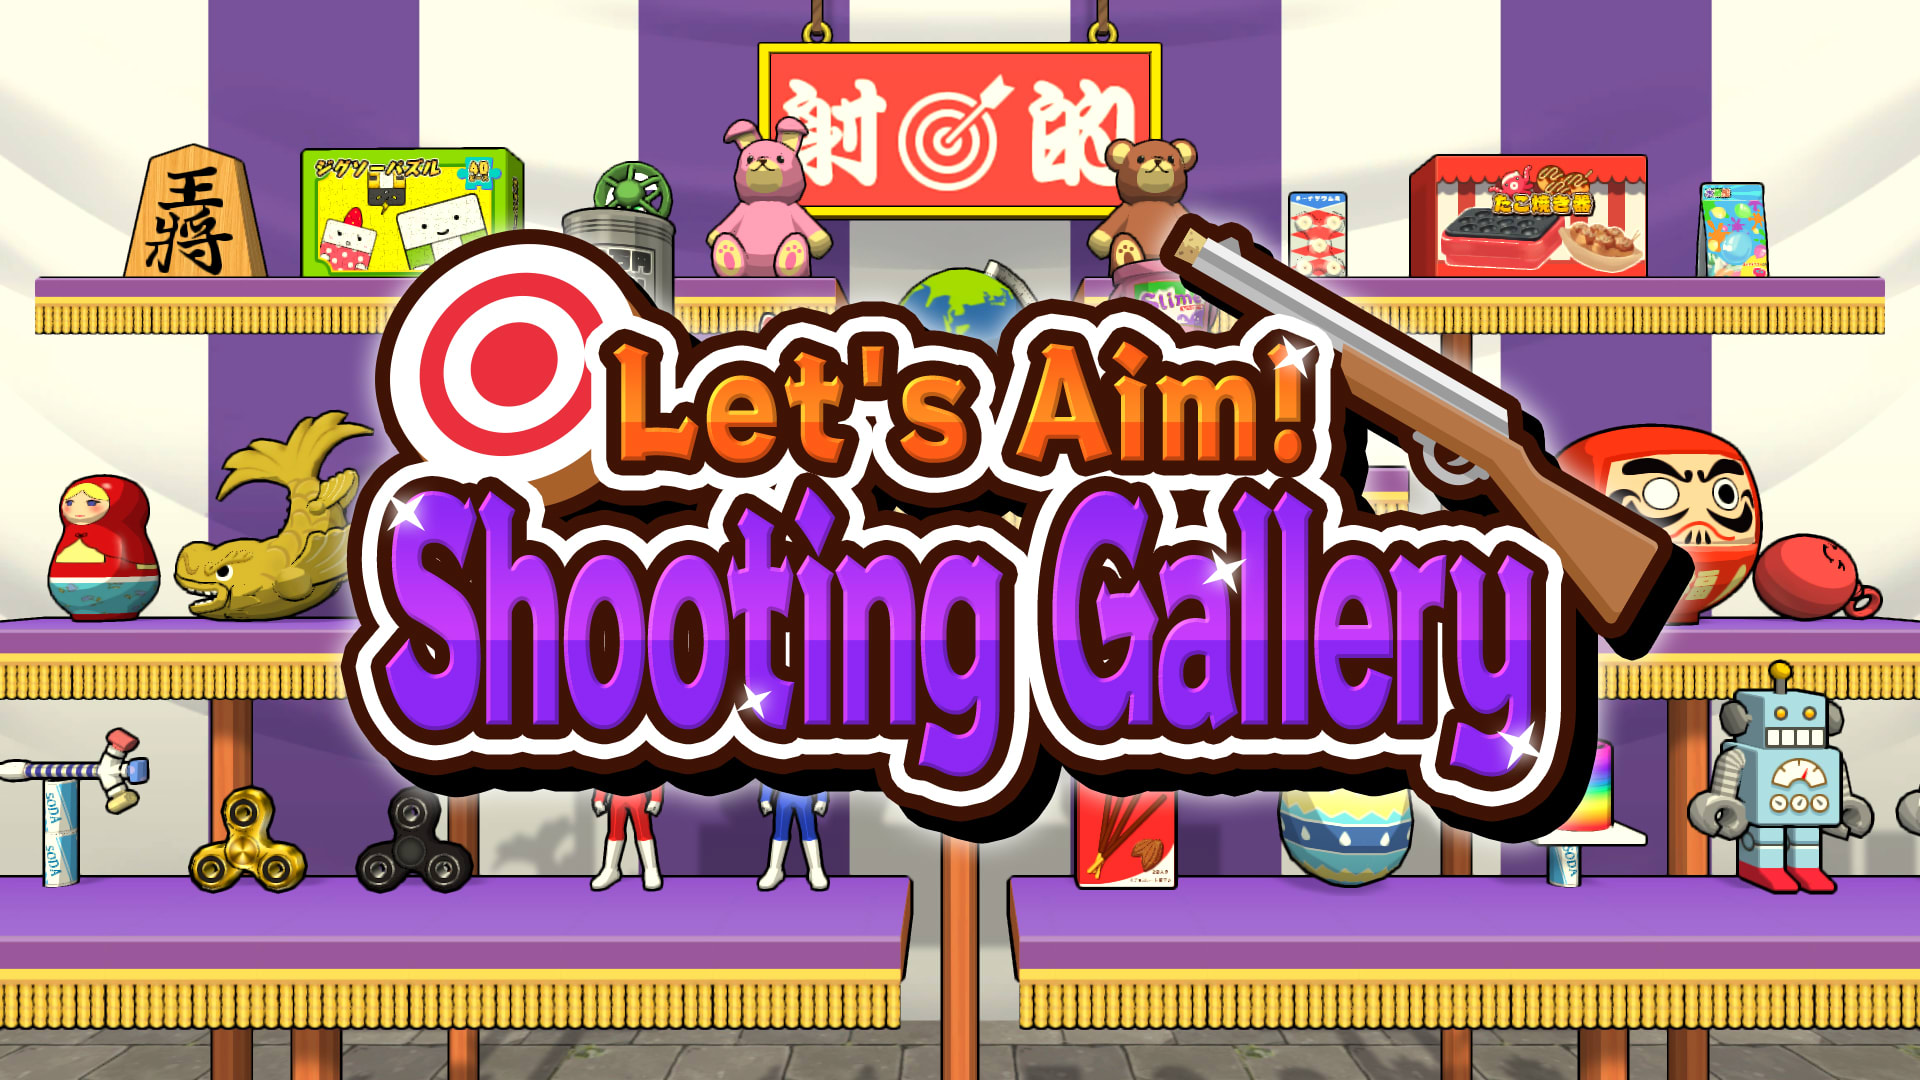 Let's Aim! Shooting Gallery